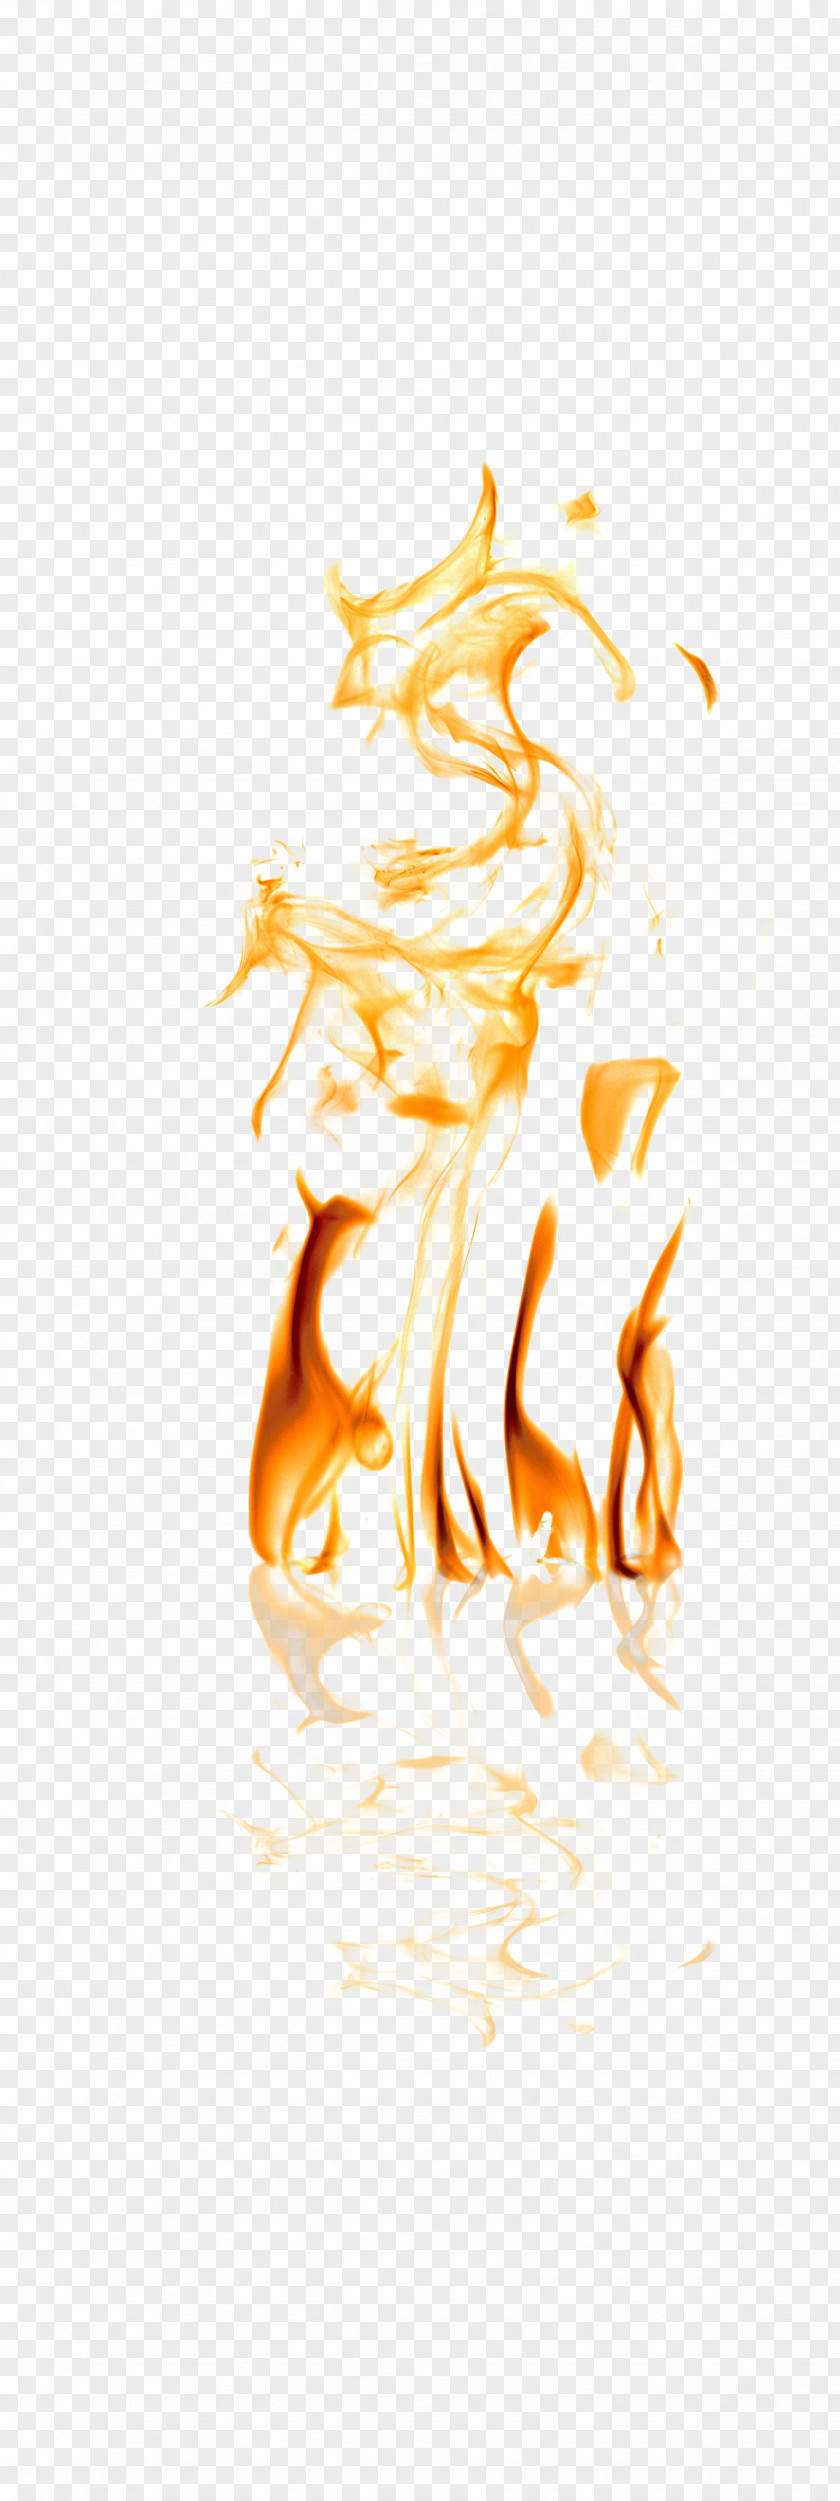 Different Shapes Of Golden Flames Light Clip Art PNG